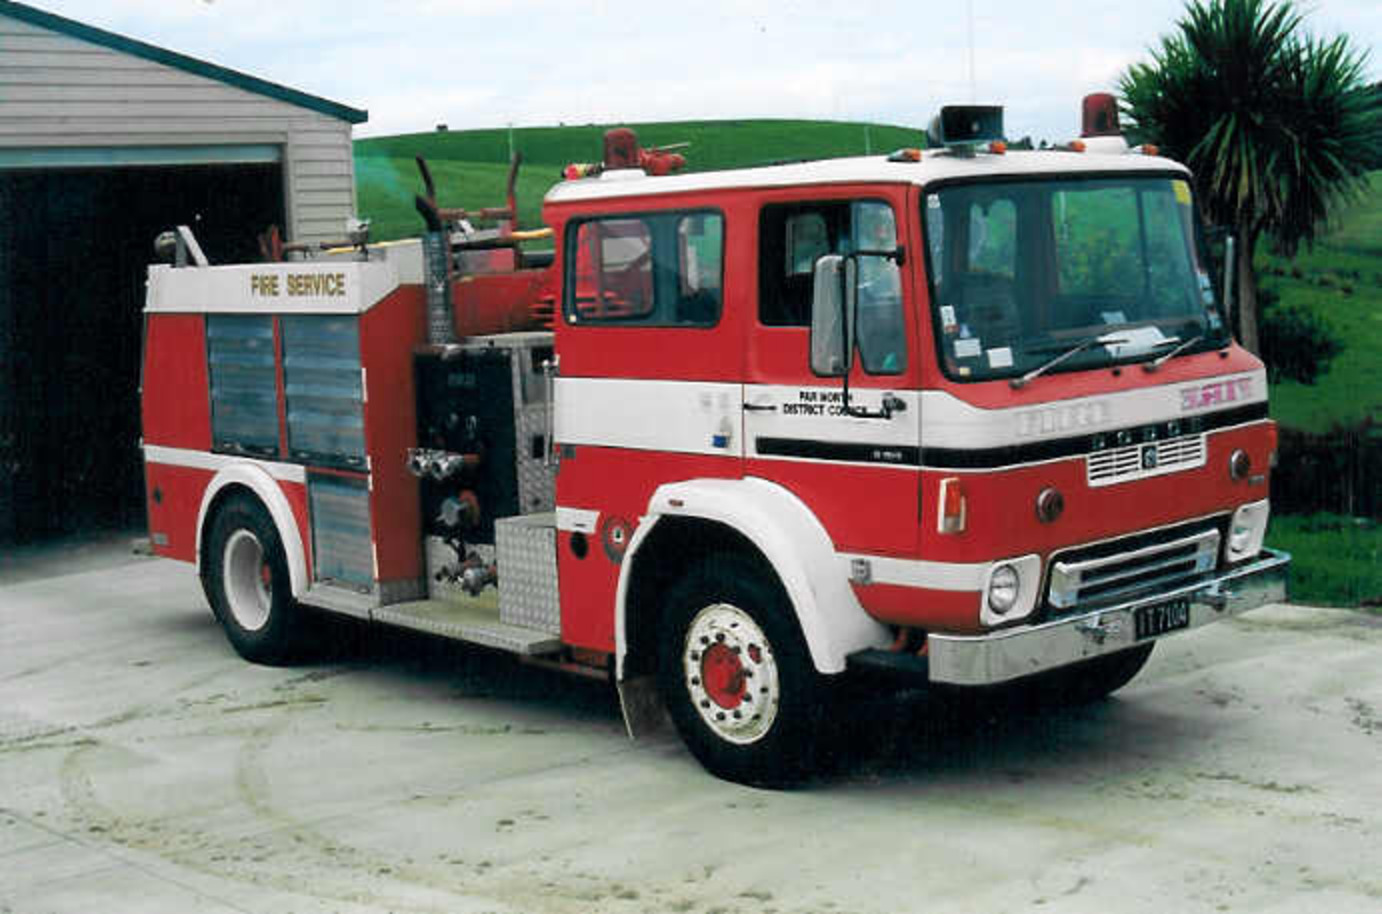 1978 Dodge RG15. IT 7104. Ex. Kerikeri, Taupo Bay Rural, Towai Rural